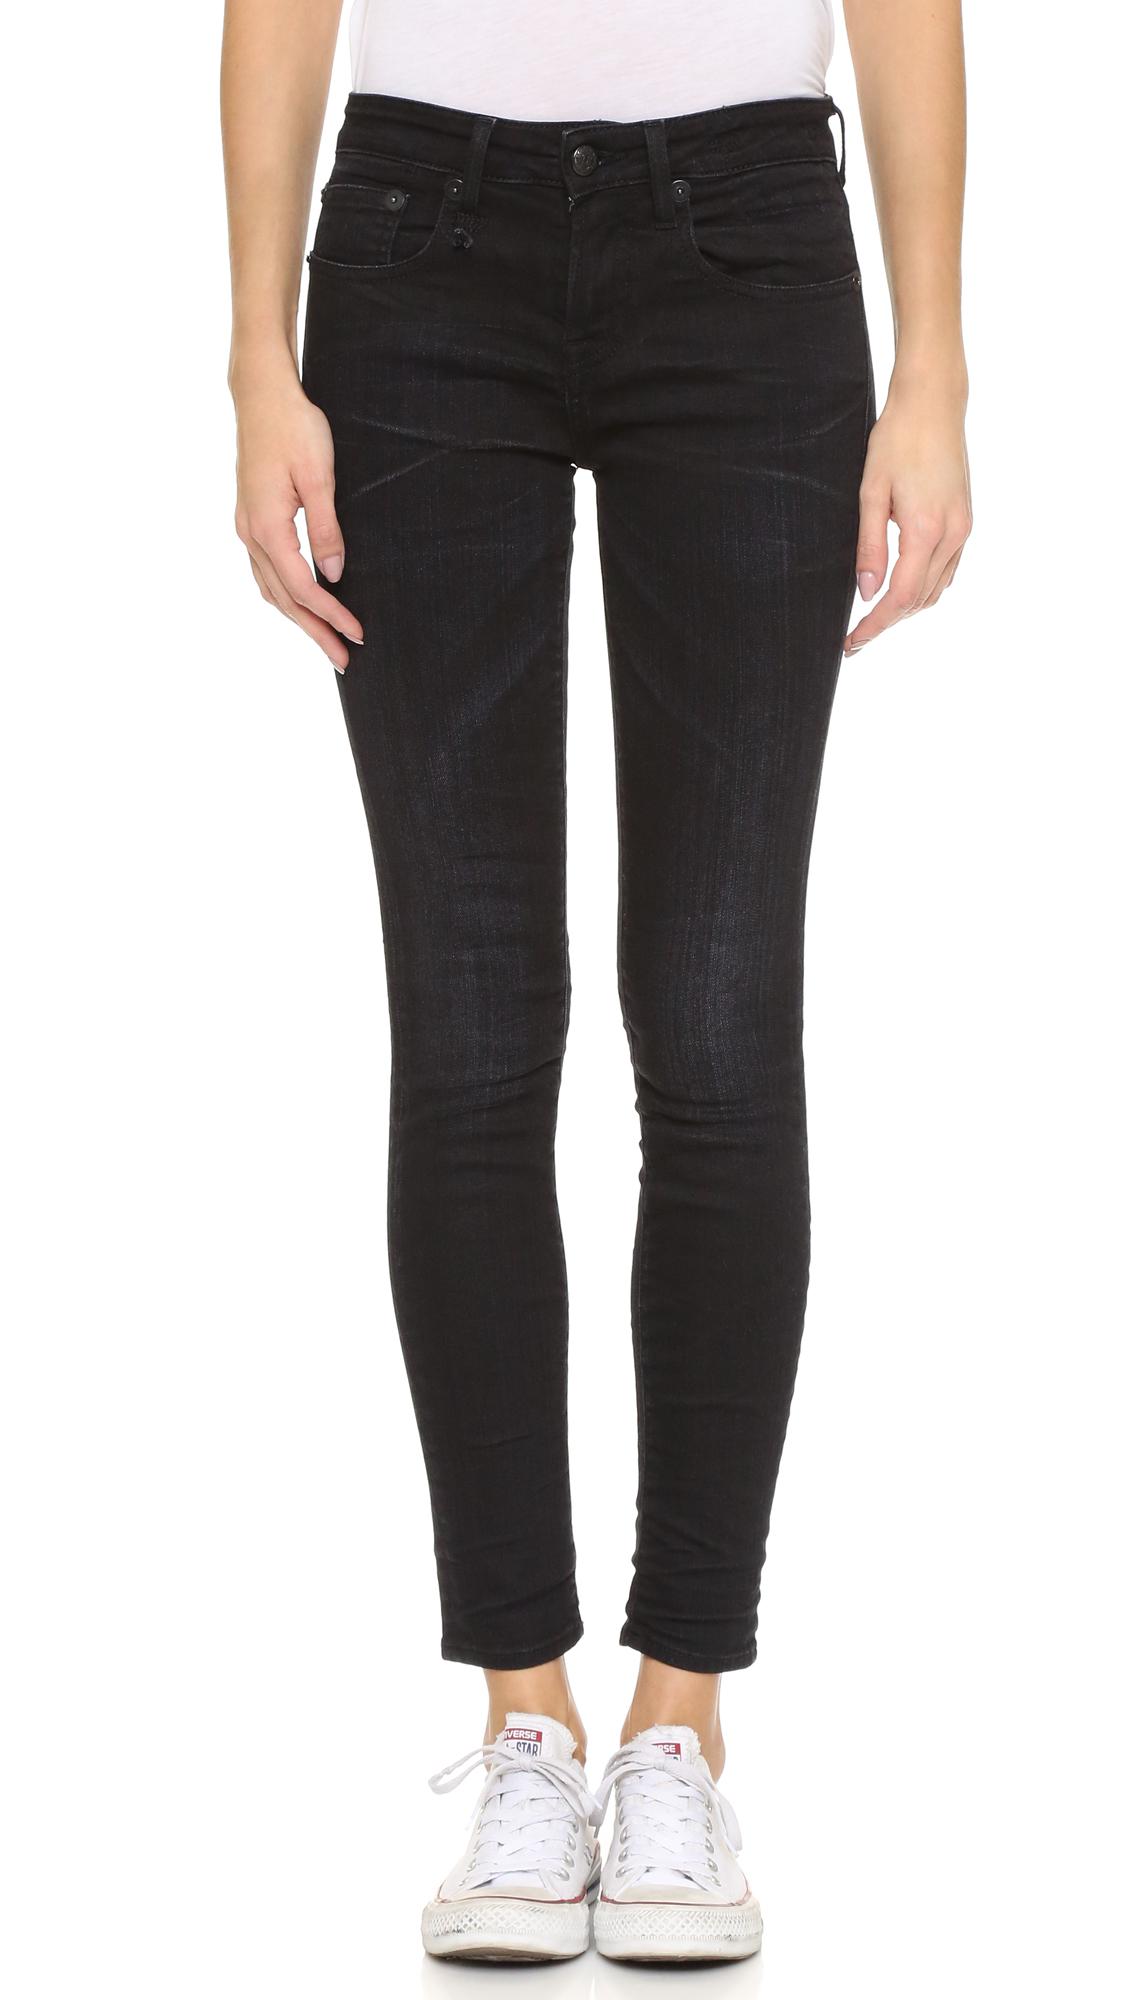 R13 Denim The Jenny Mid Rise Skinny Jeans in Black - Lyst